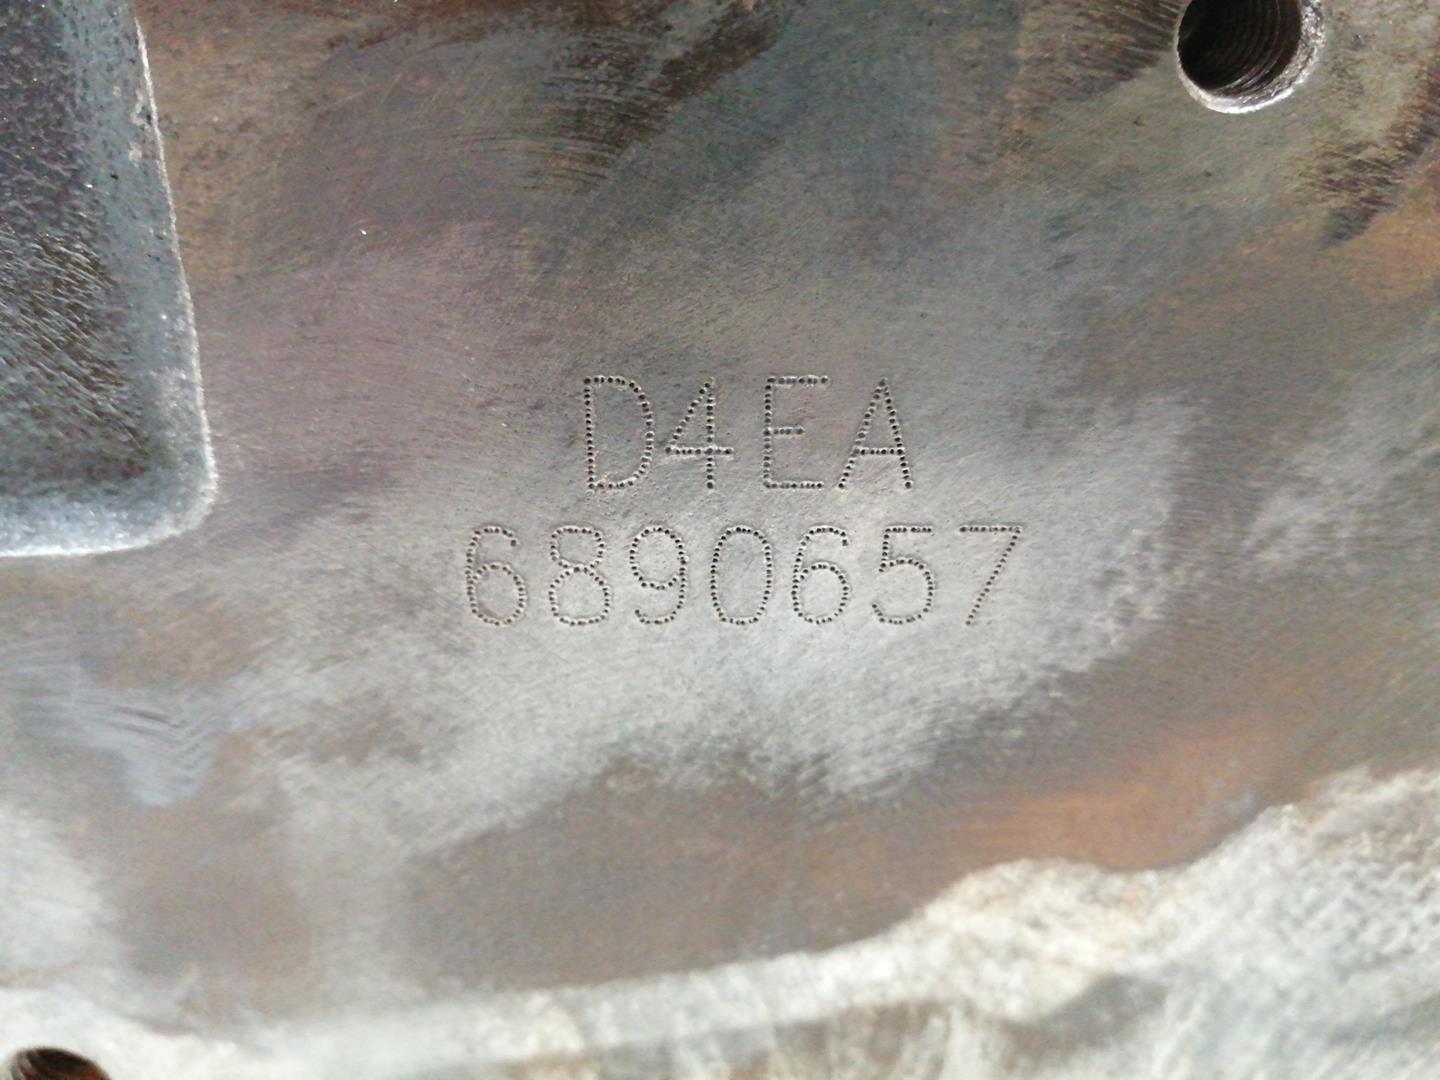 KIA Carens SM (2000-2013) Engine Block D4EA 19385719